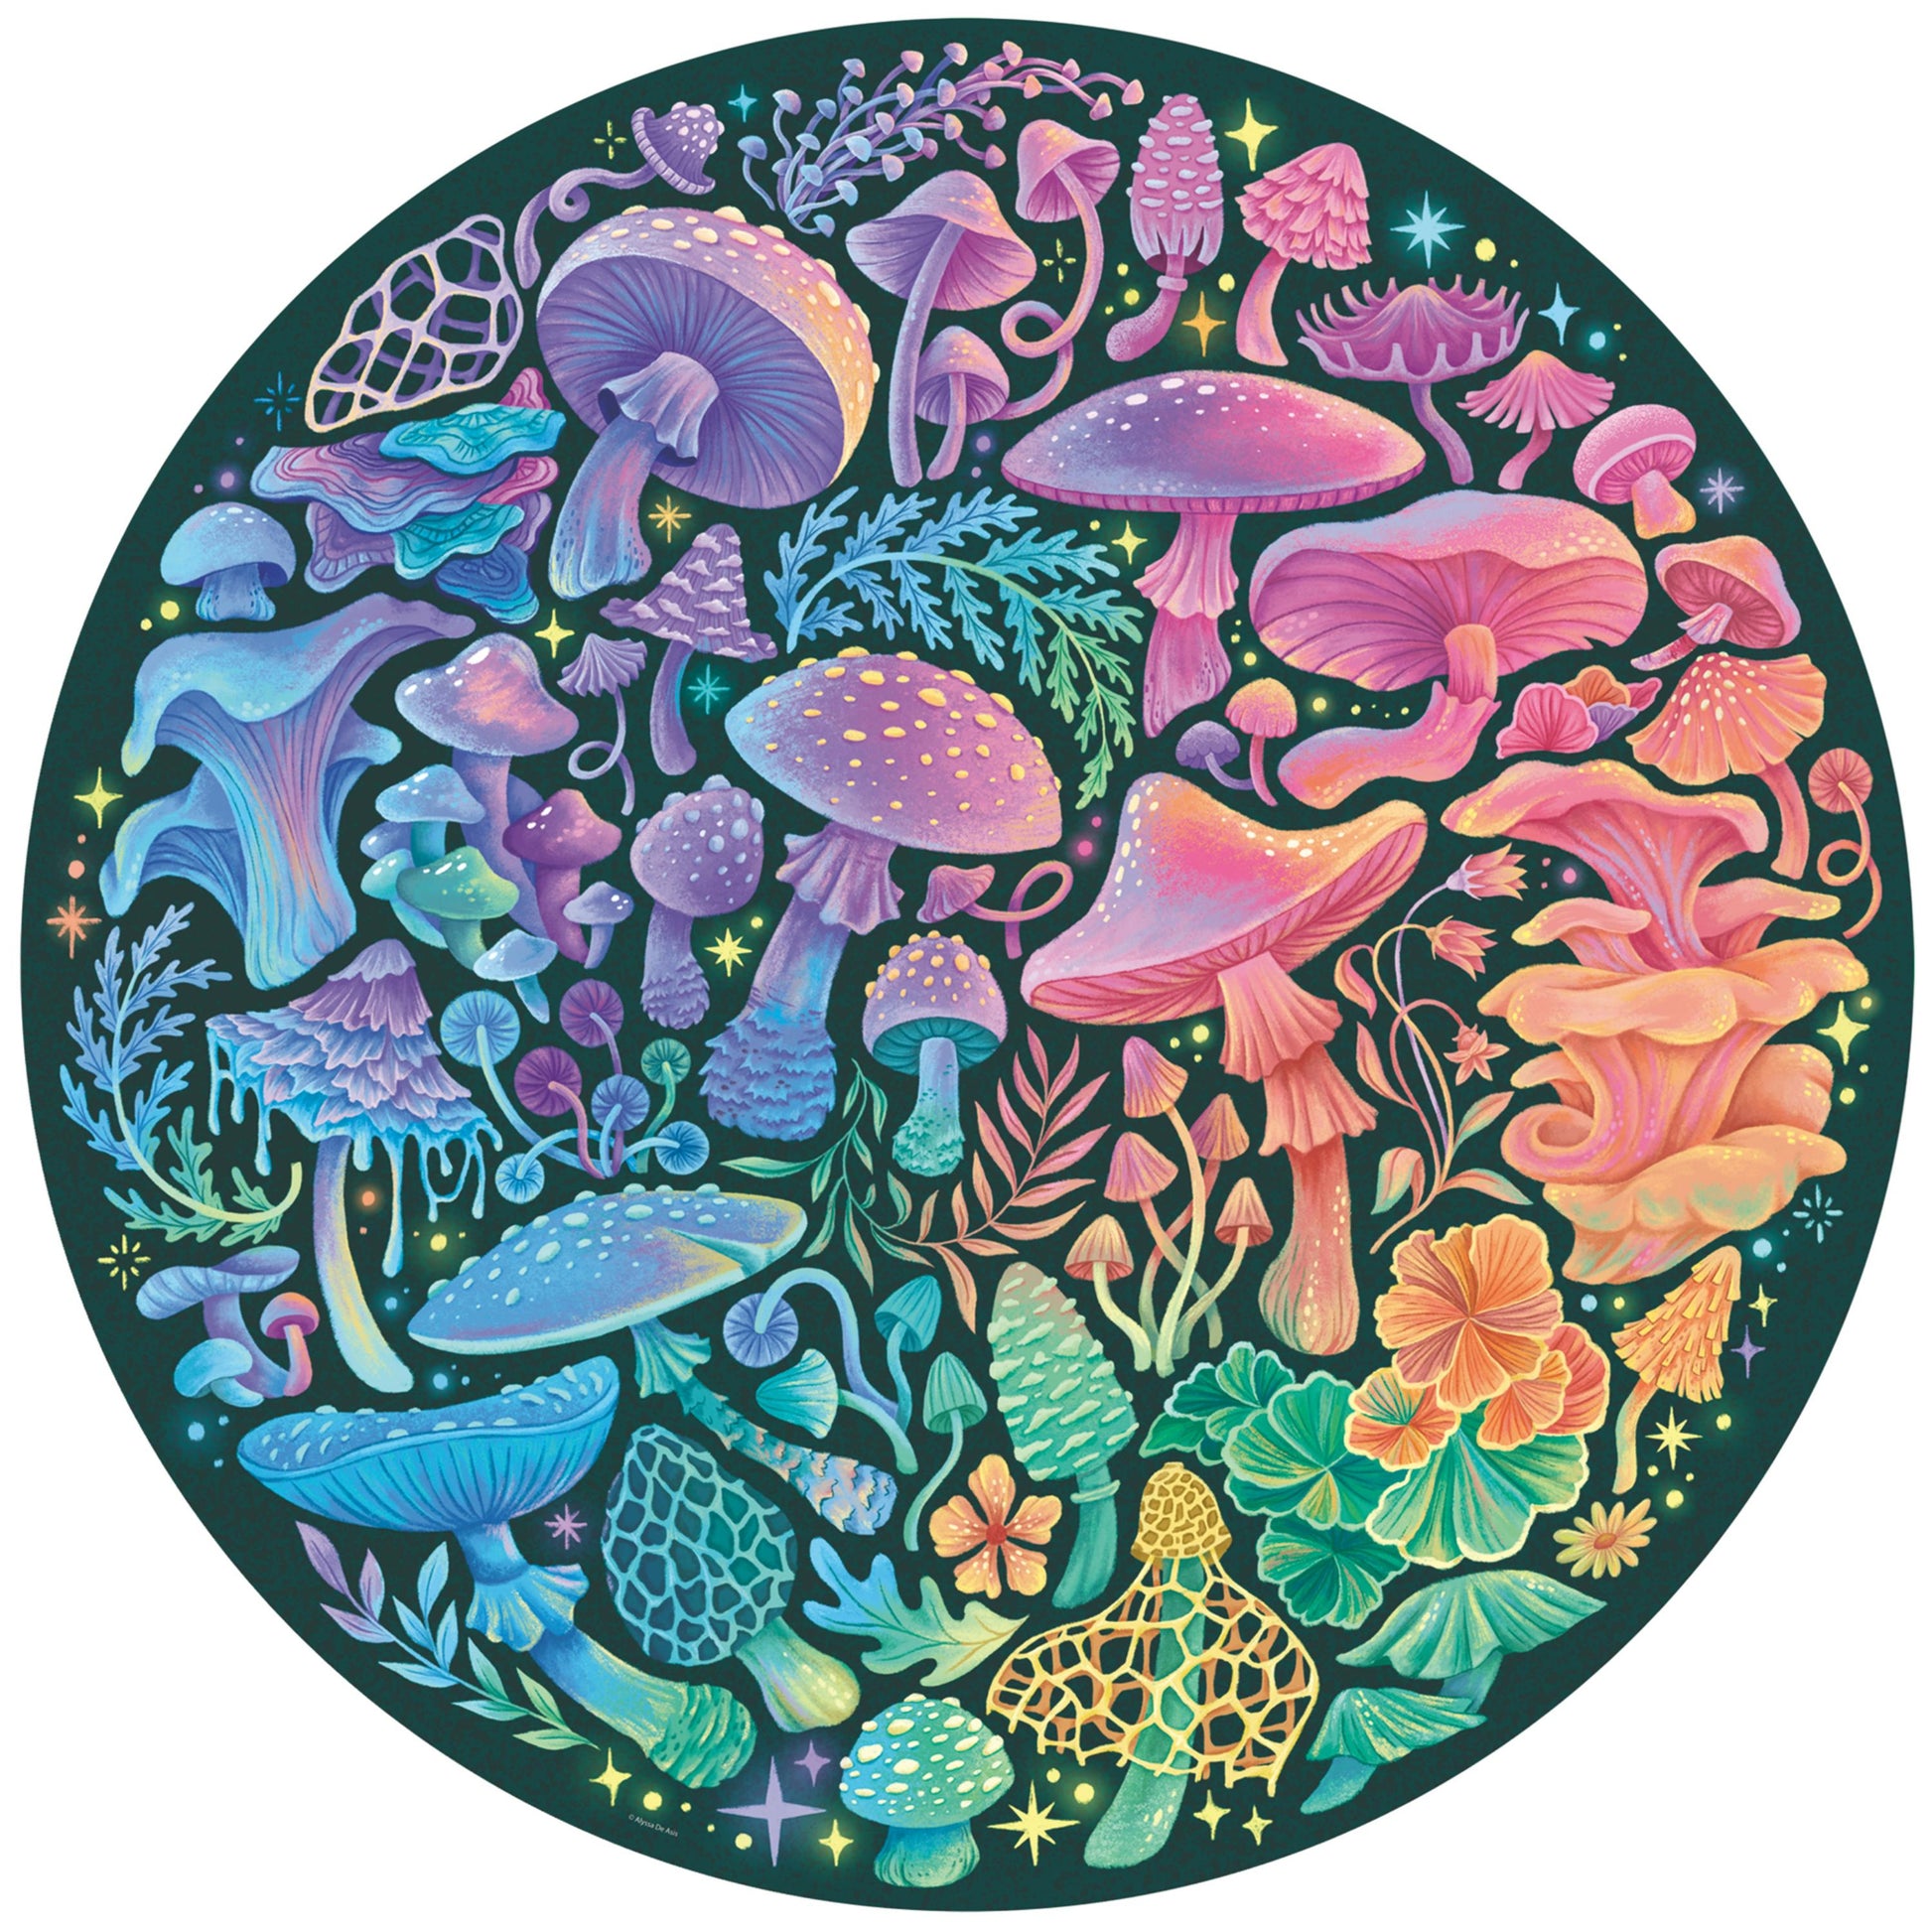 500 Piece Puzzle - Circle of Colors: Mushrooms